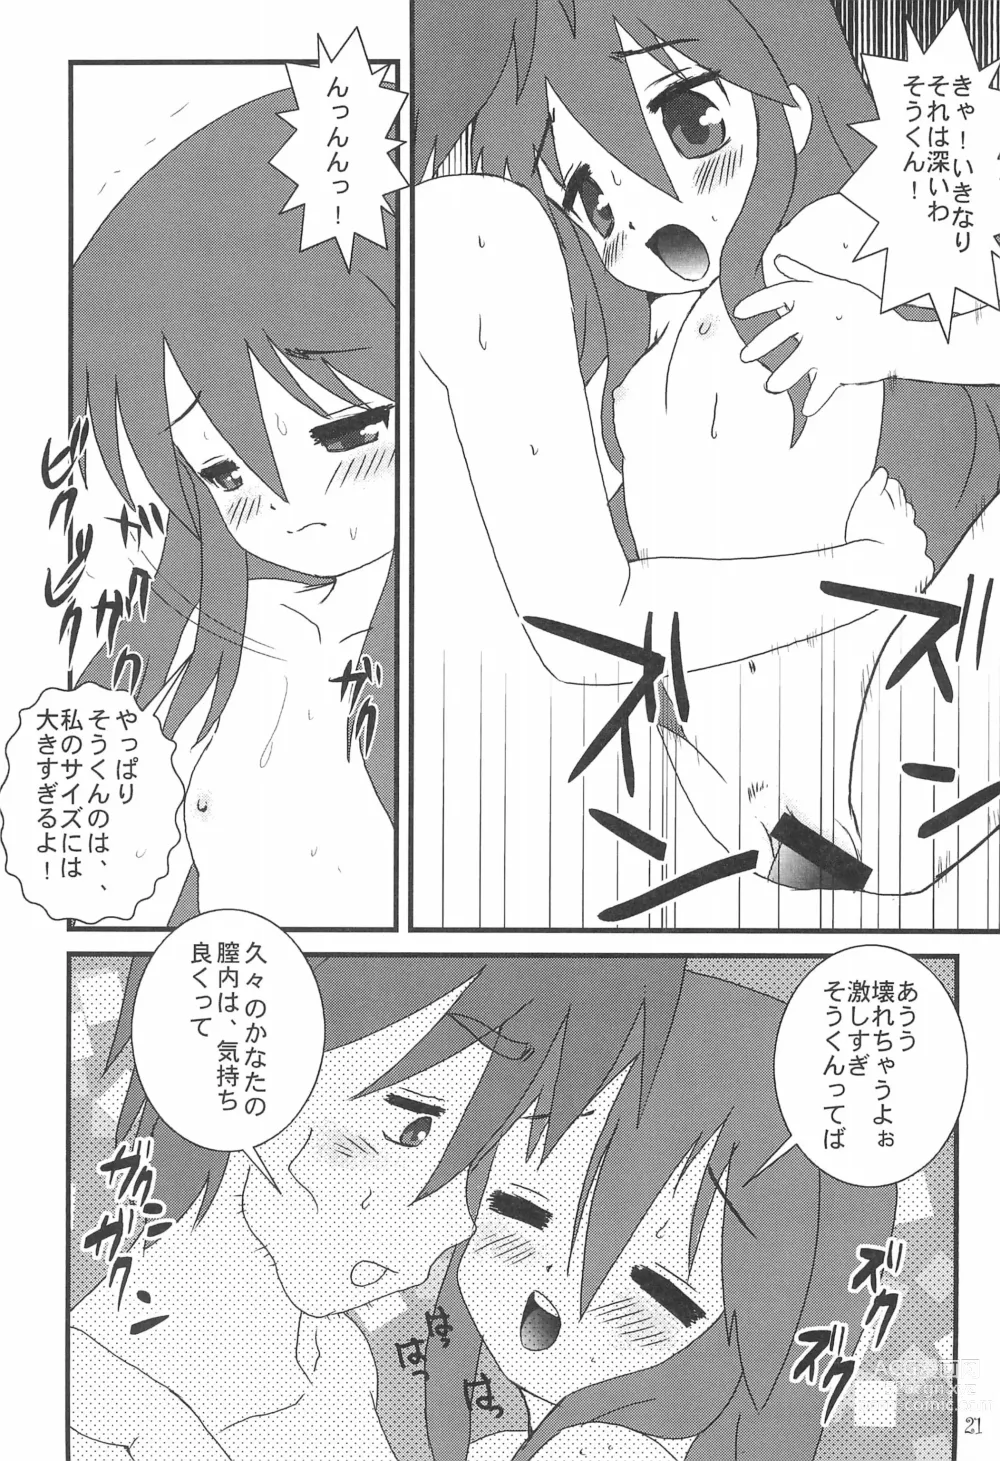 Page 23 of doujinshi Retort